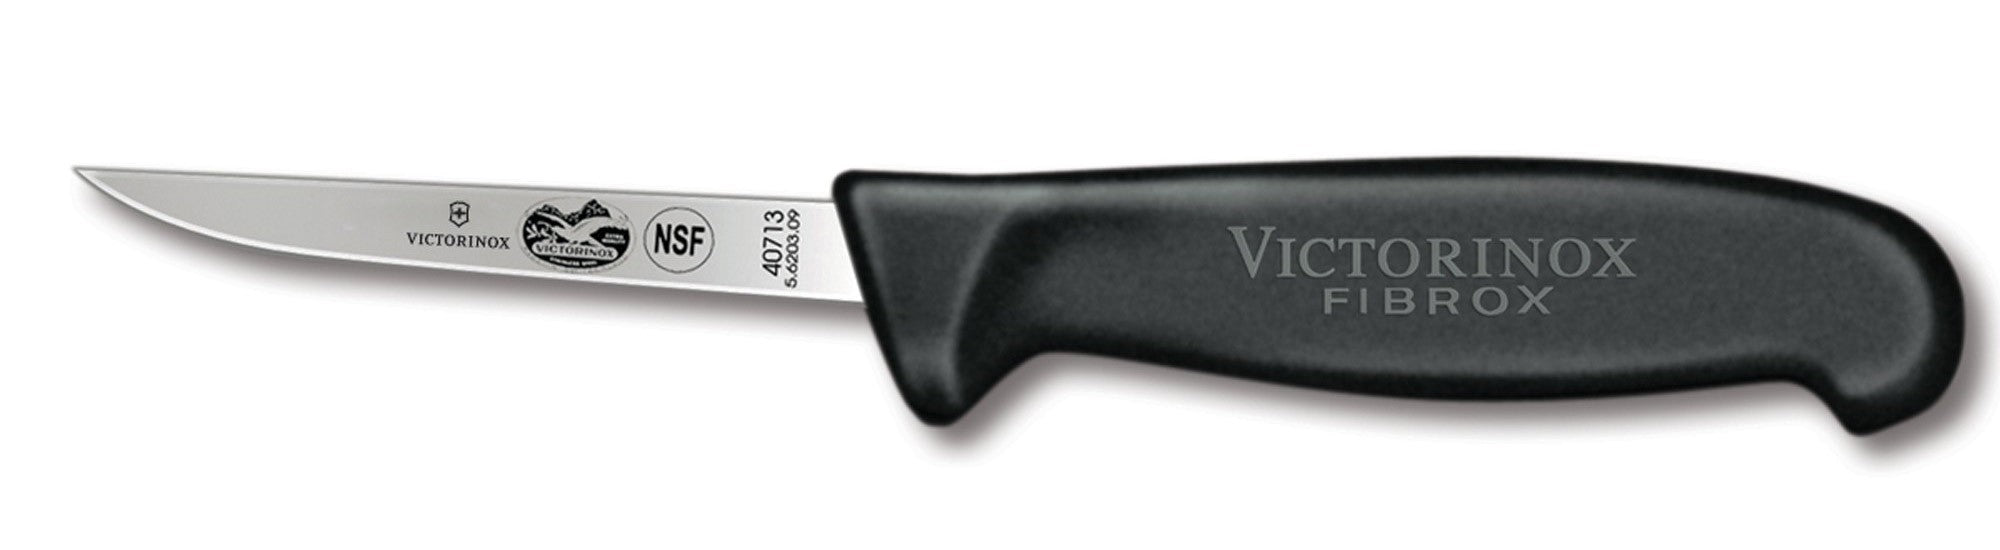 Victorinox Swiss Army Fibrox 3.75" Poultry Boning Knife - 40713